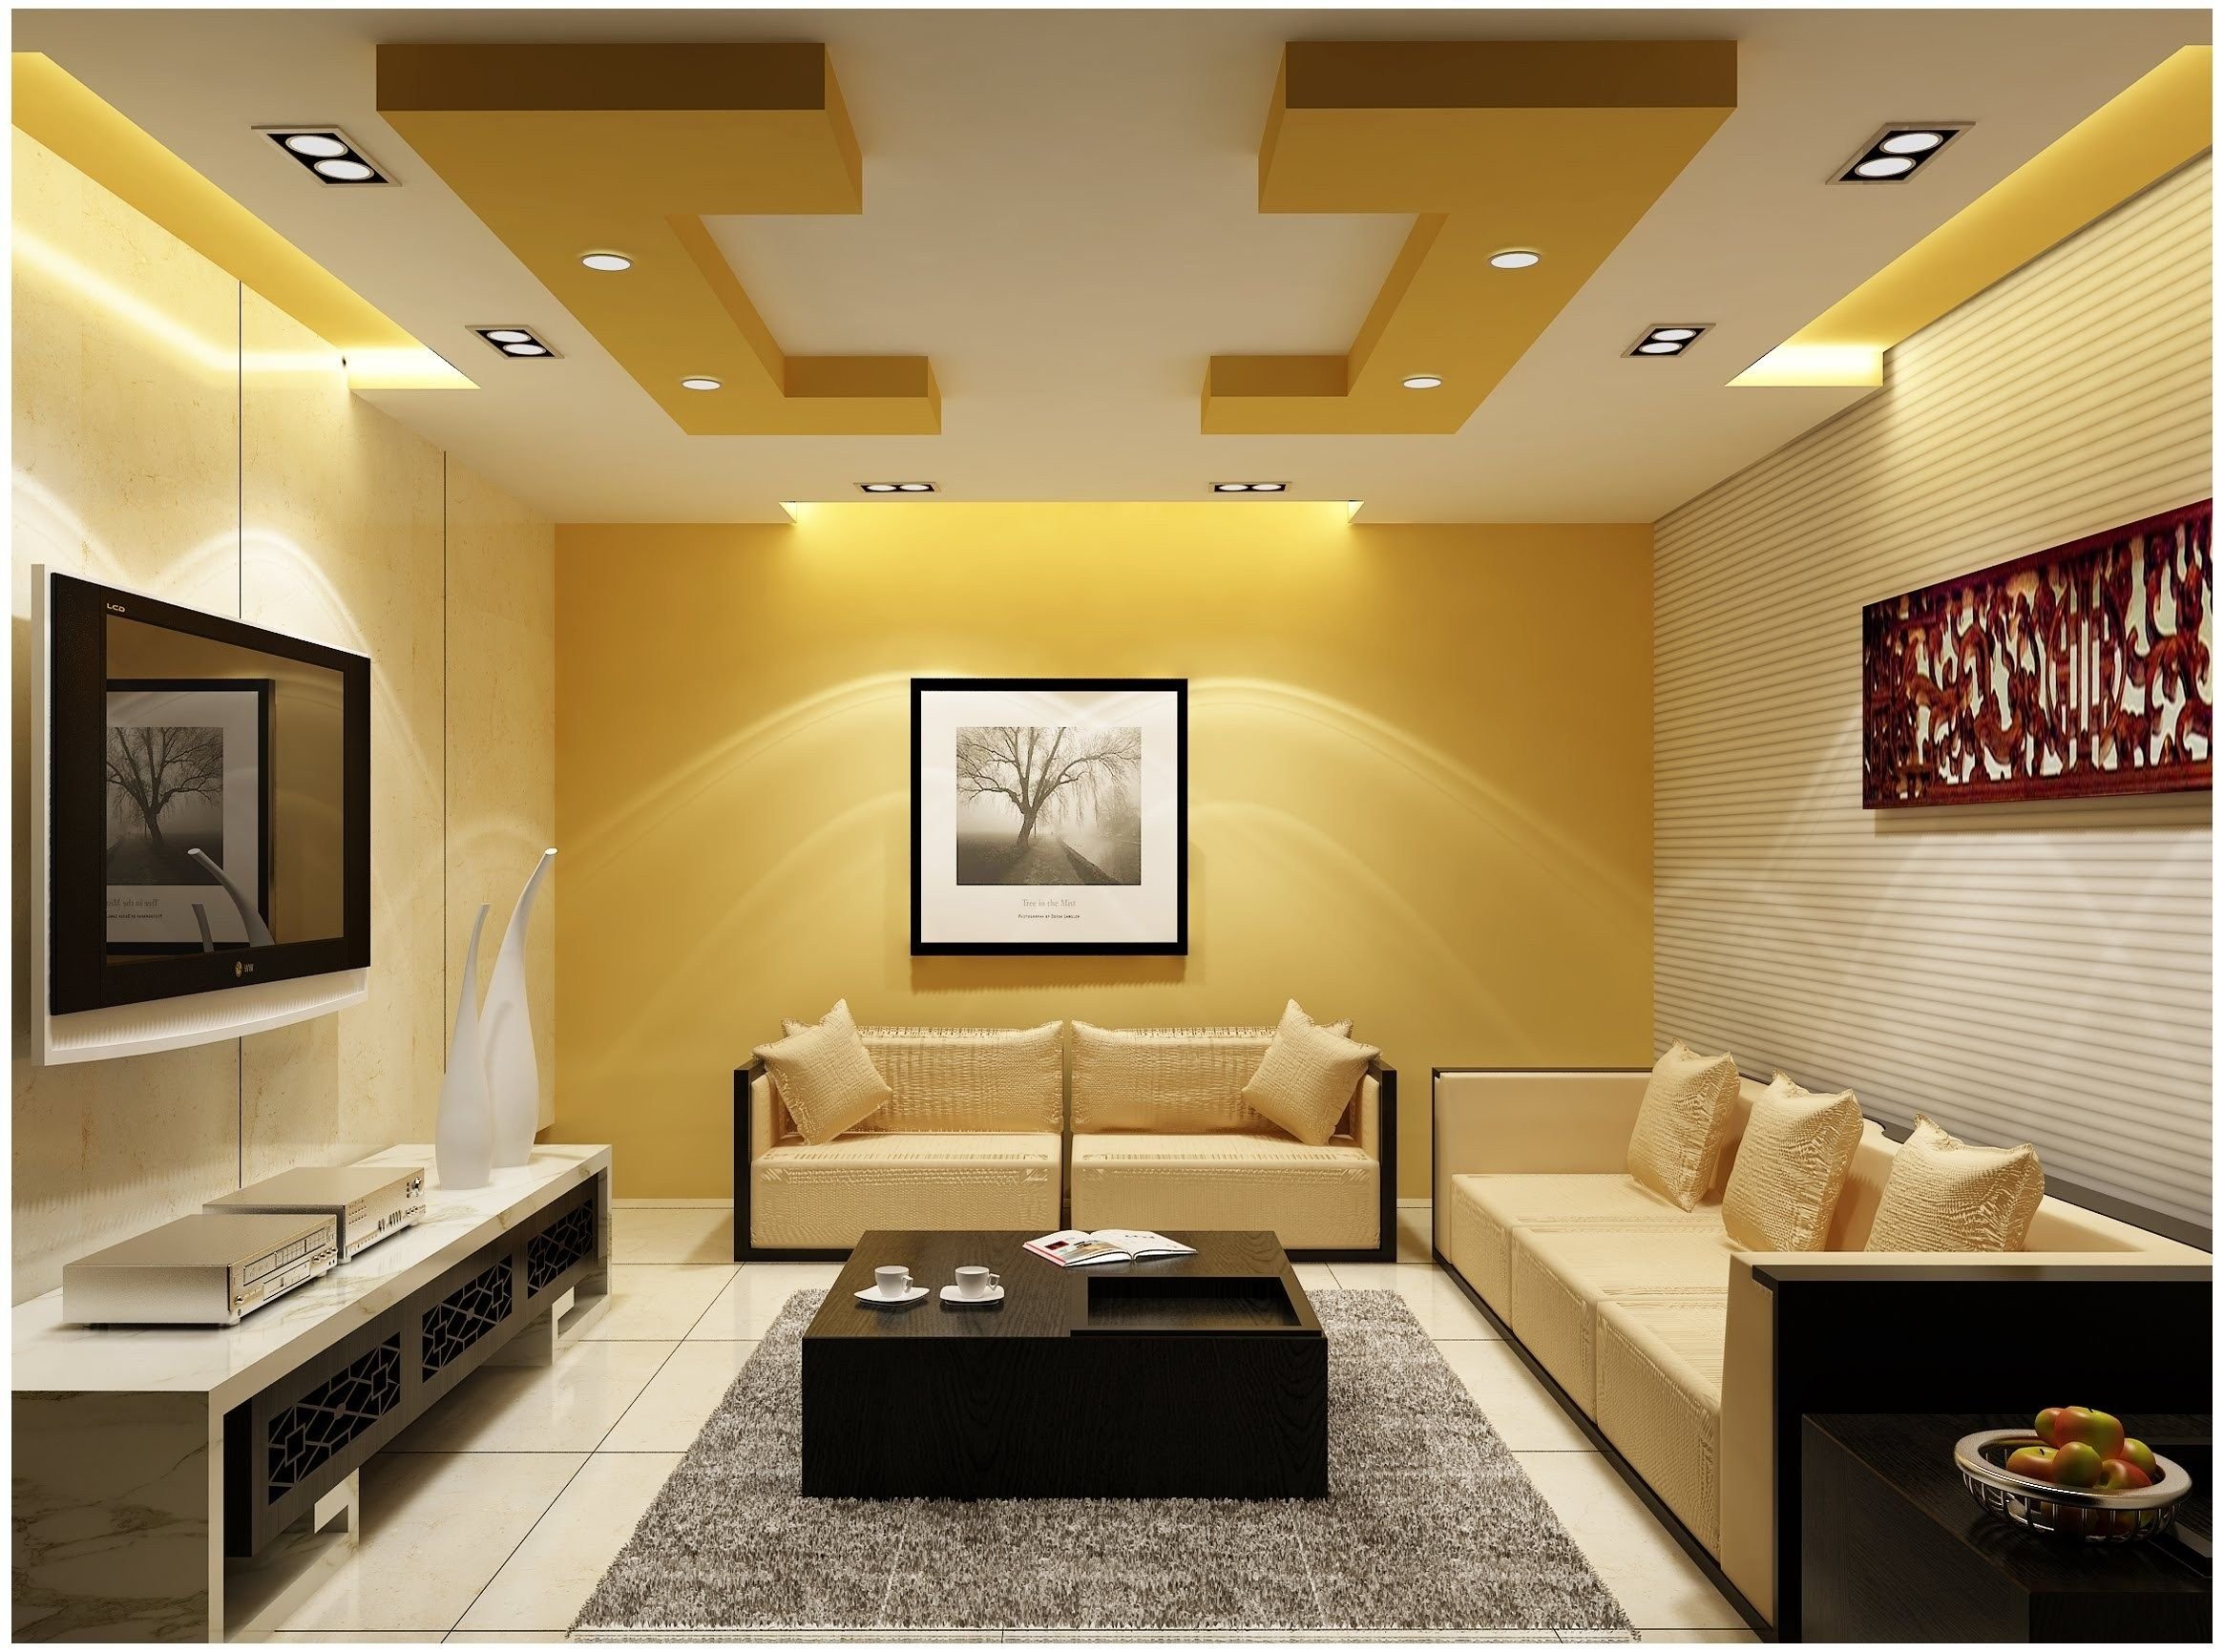 10 Lovable Ceiling Ideas For Living Room pinirfan kazi on false ceiling ideas pinterest modern living 2022